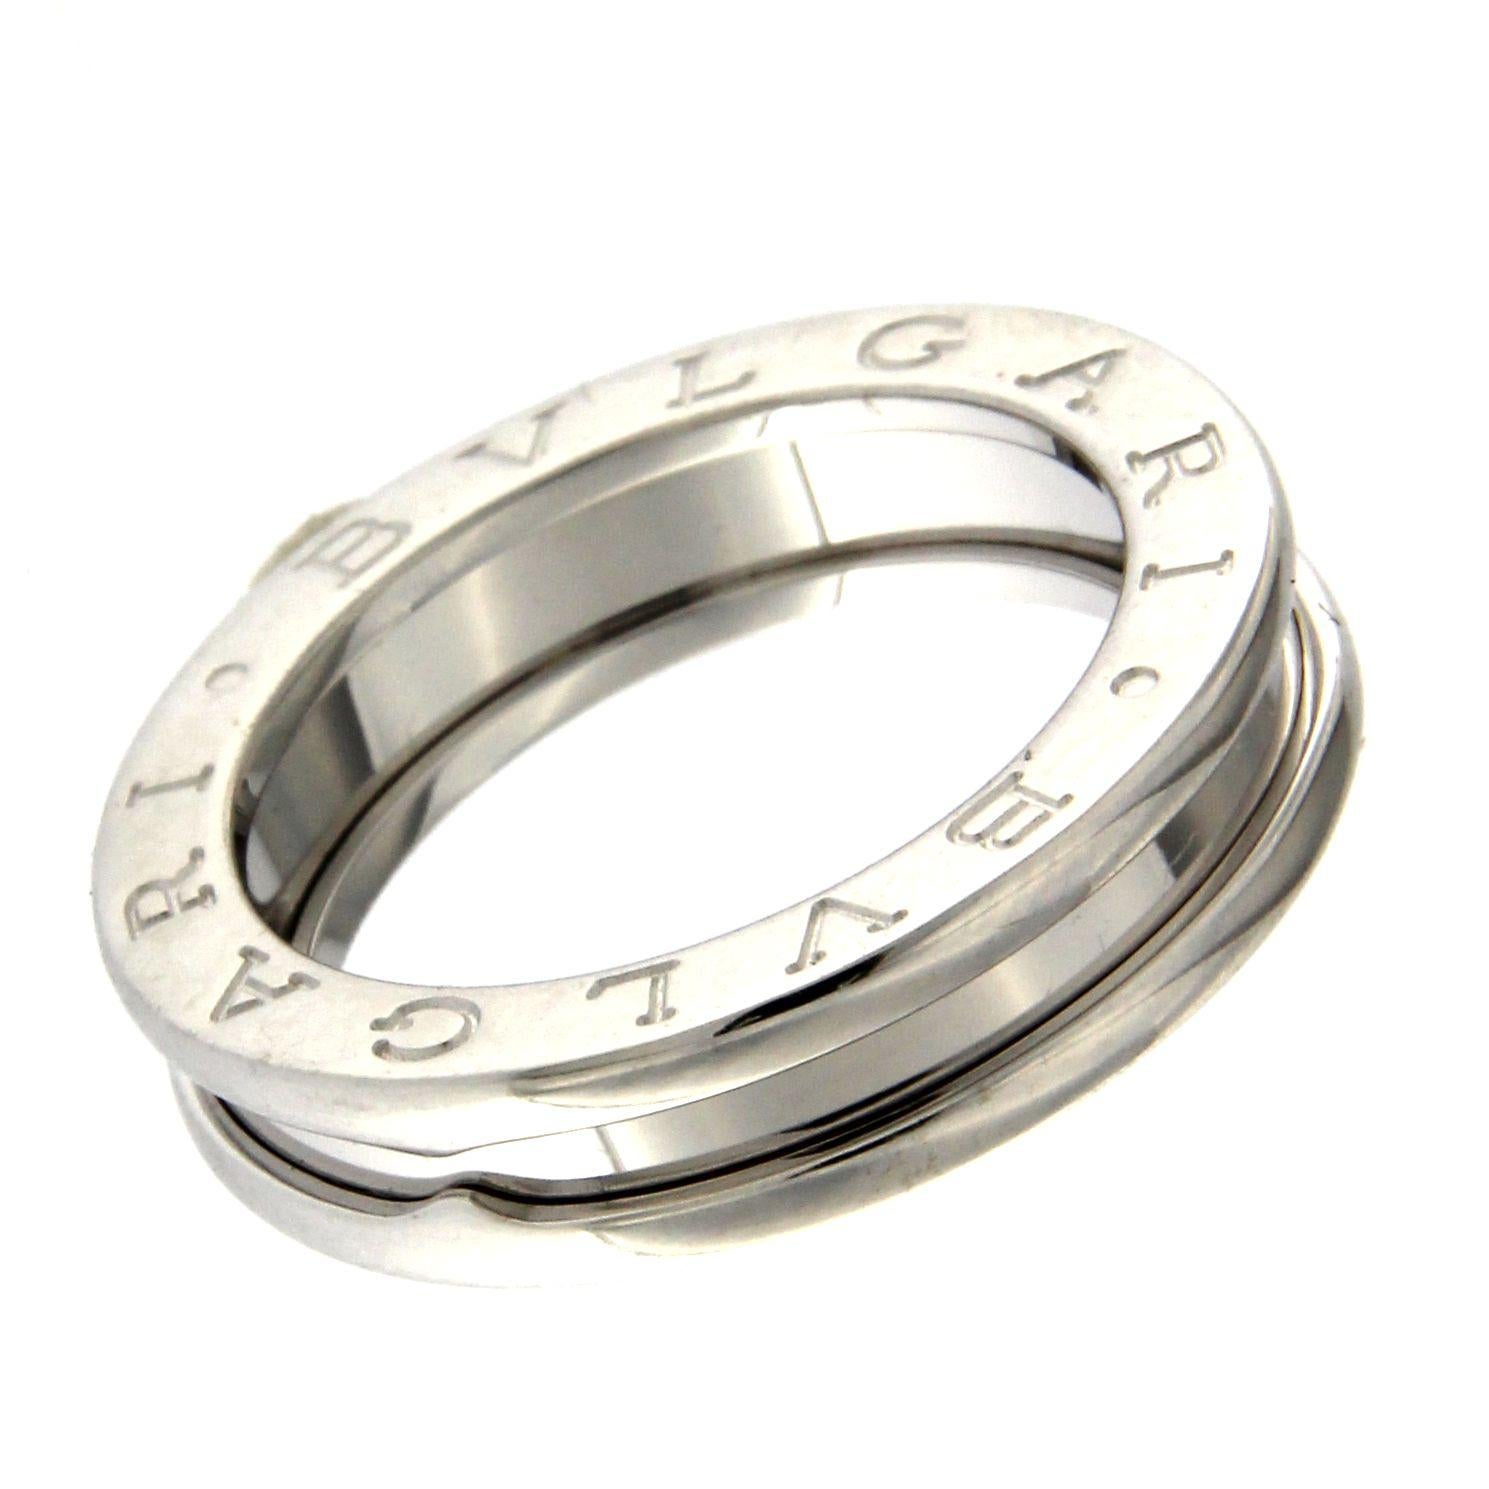 BZERO1 ring 18kt white gold       size 50       1 Band